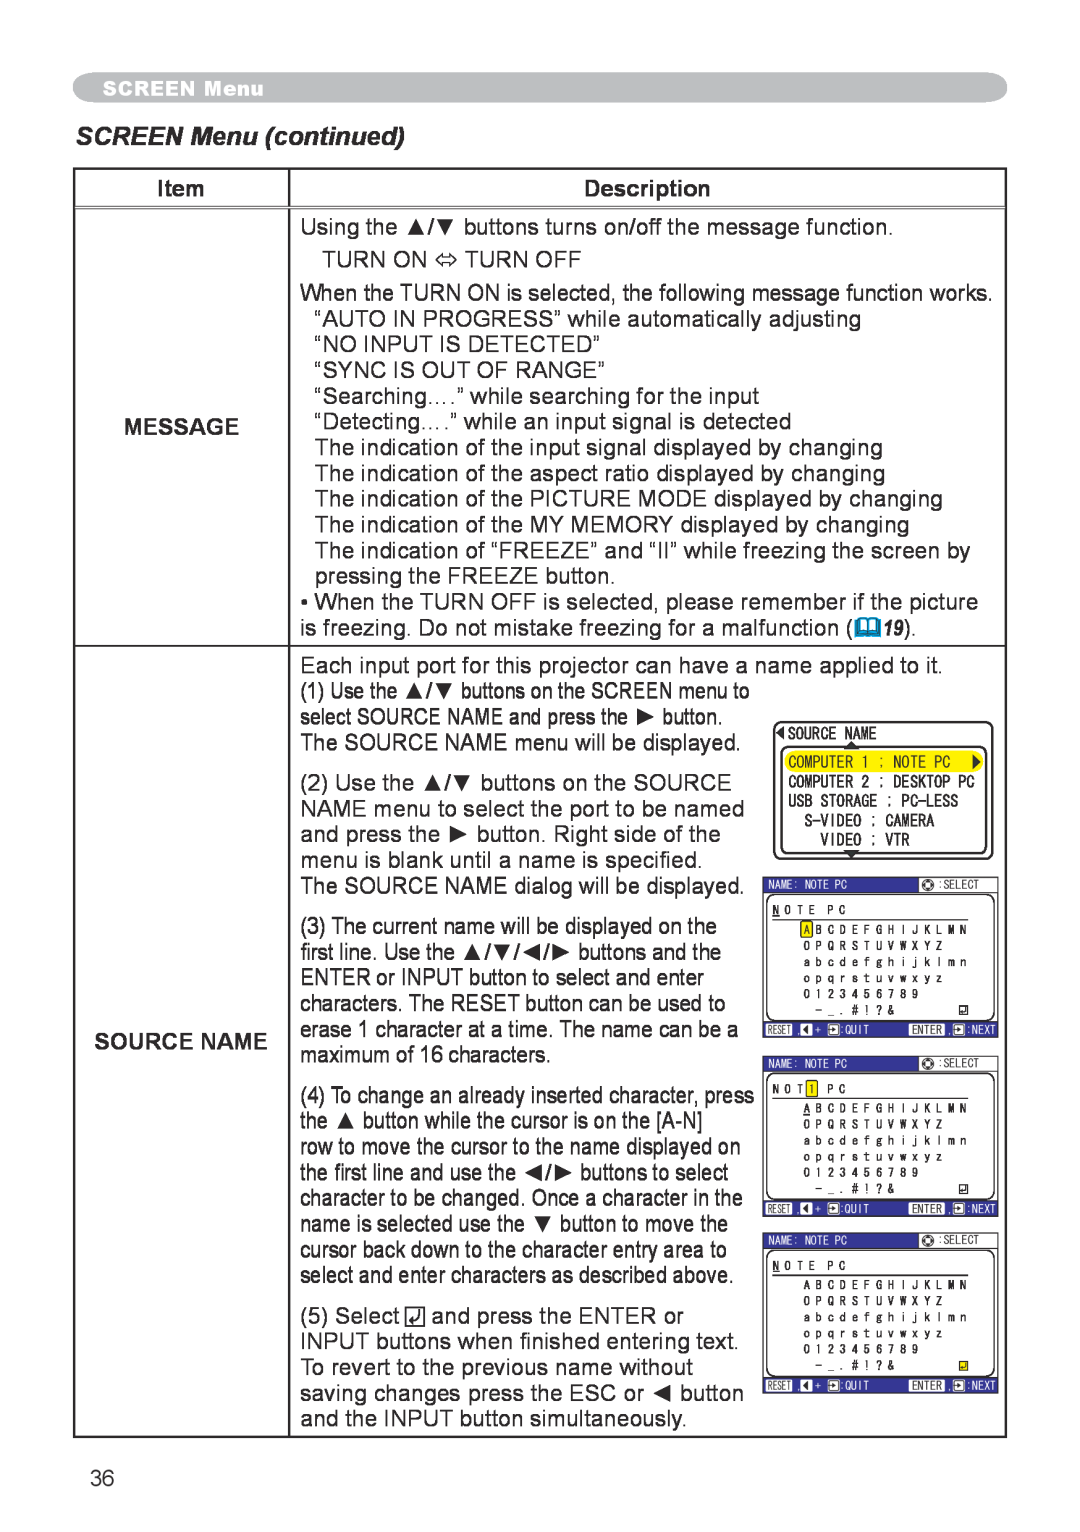 3M X20 manual SCREEN Menu continued, Description, Message, Source Name 